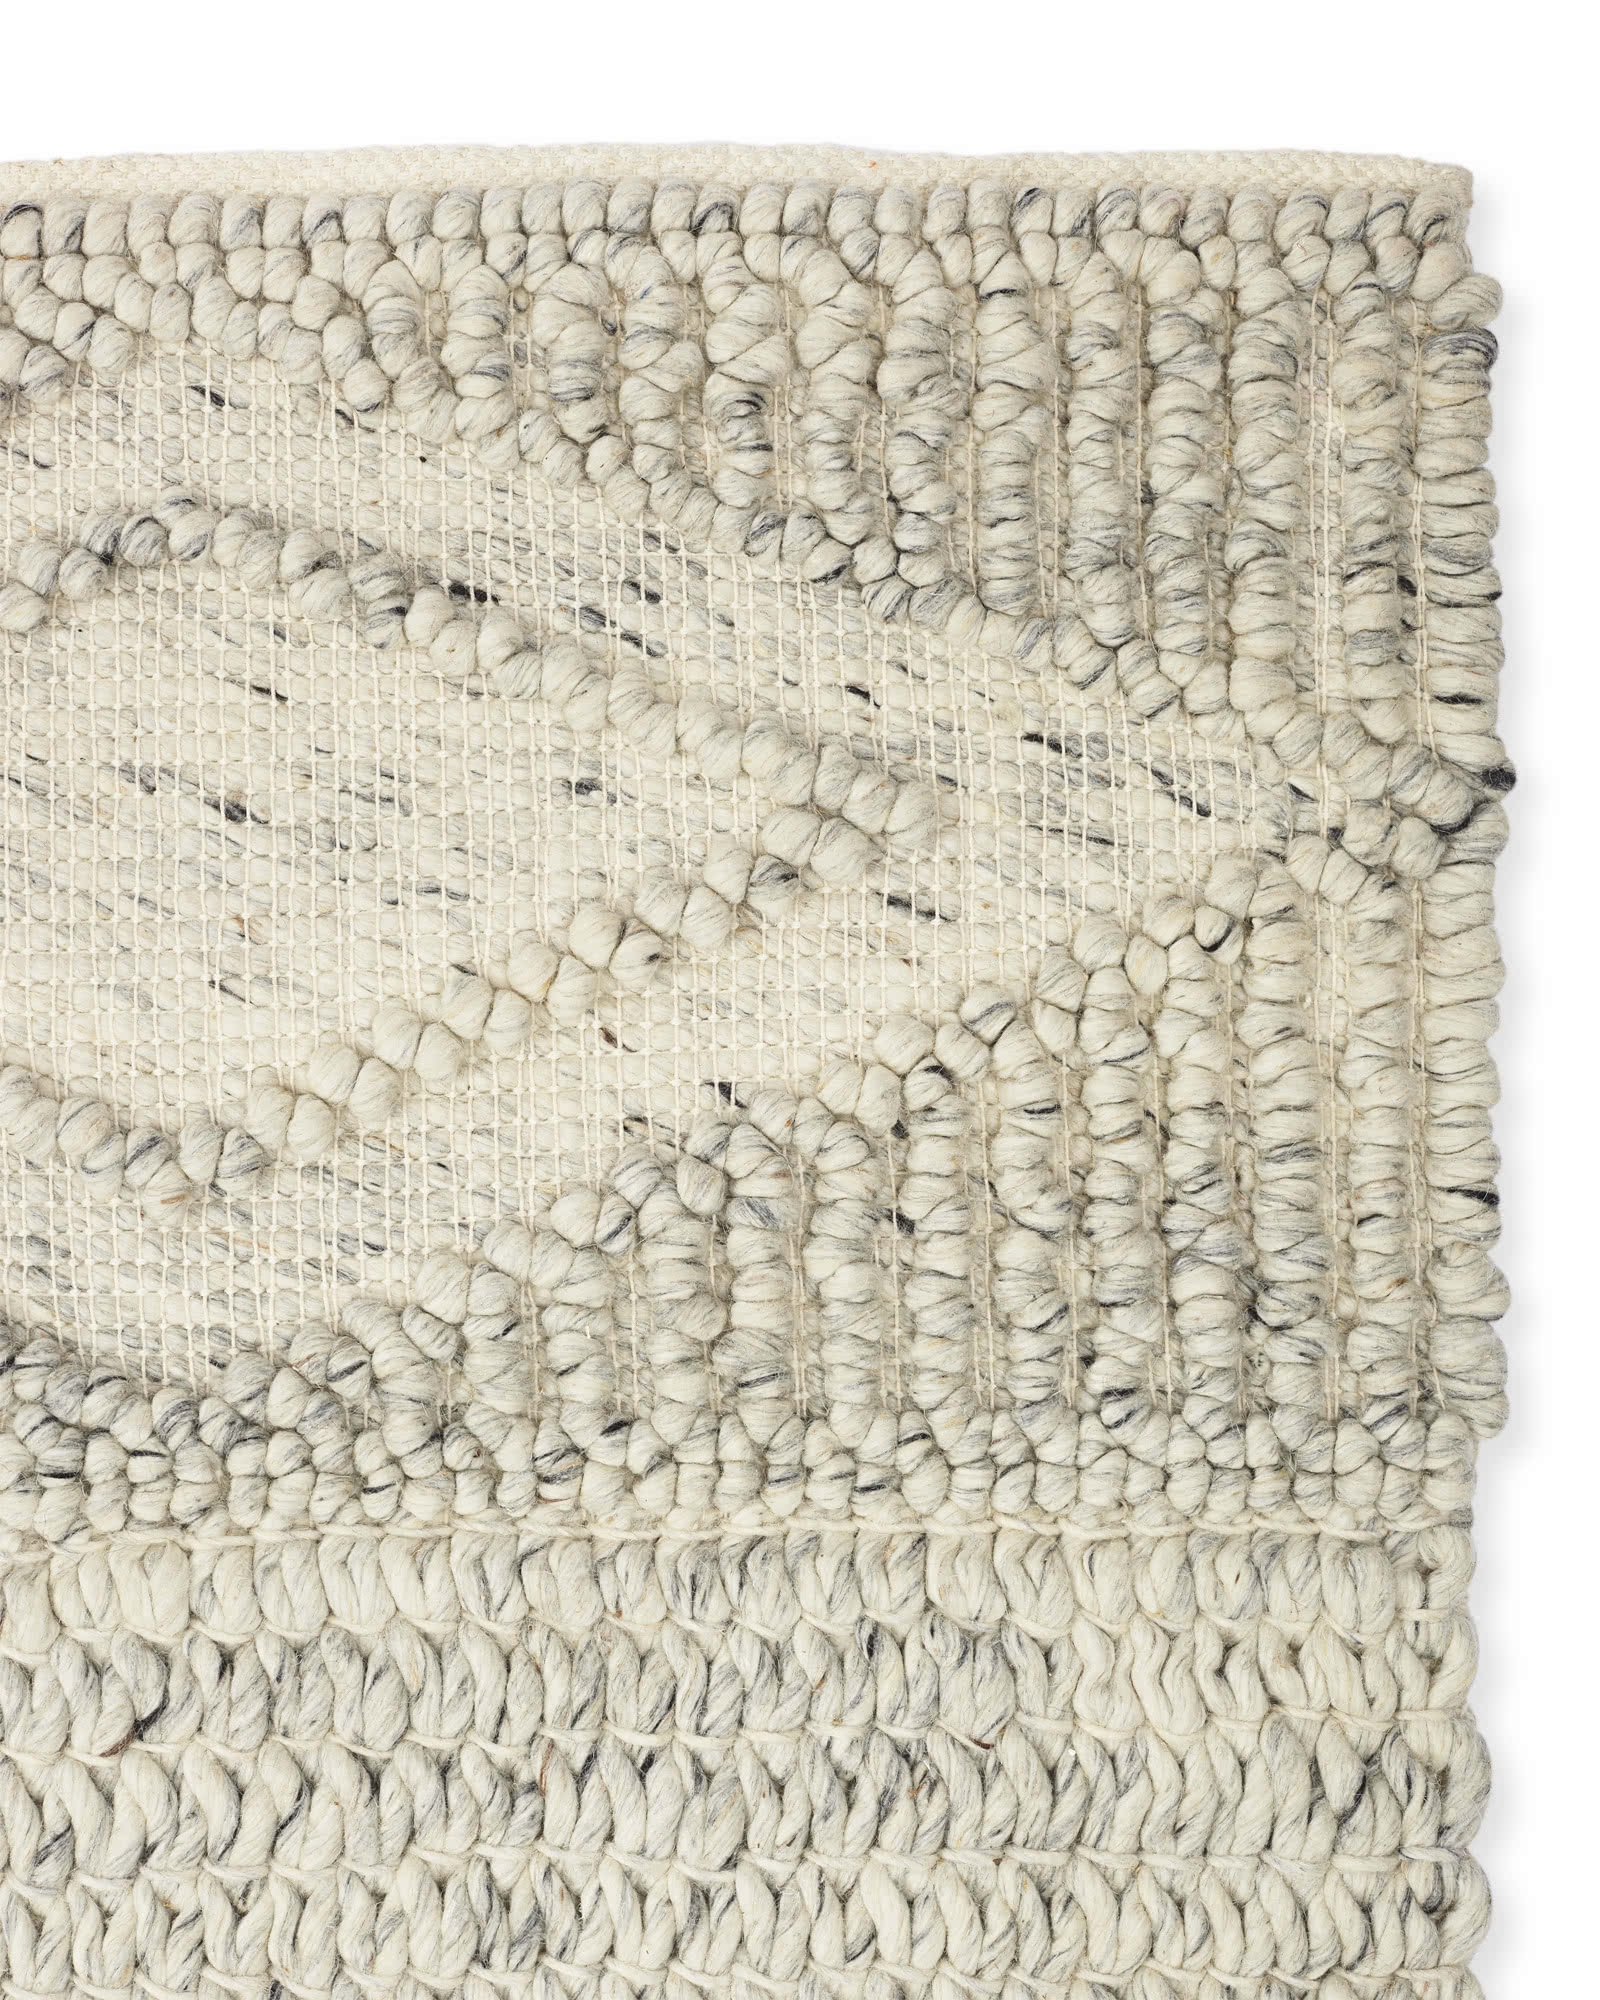 Macramé Wool Rug - Fog - 11' x 14' - Image 1